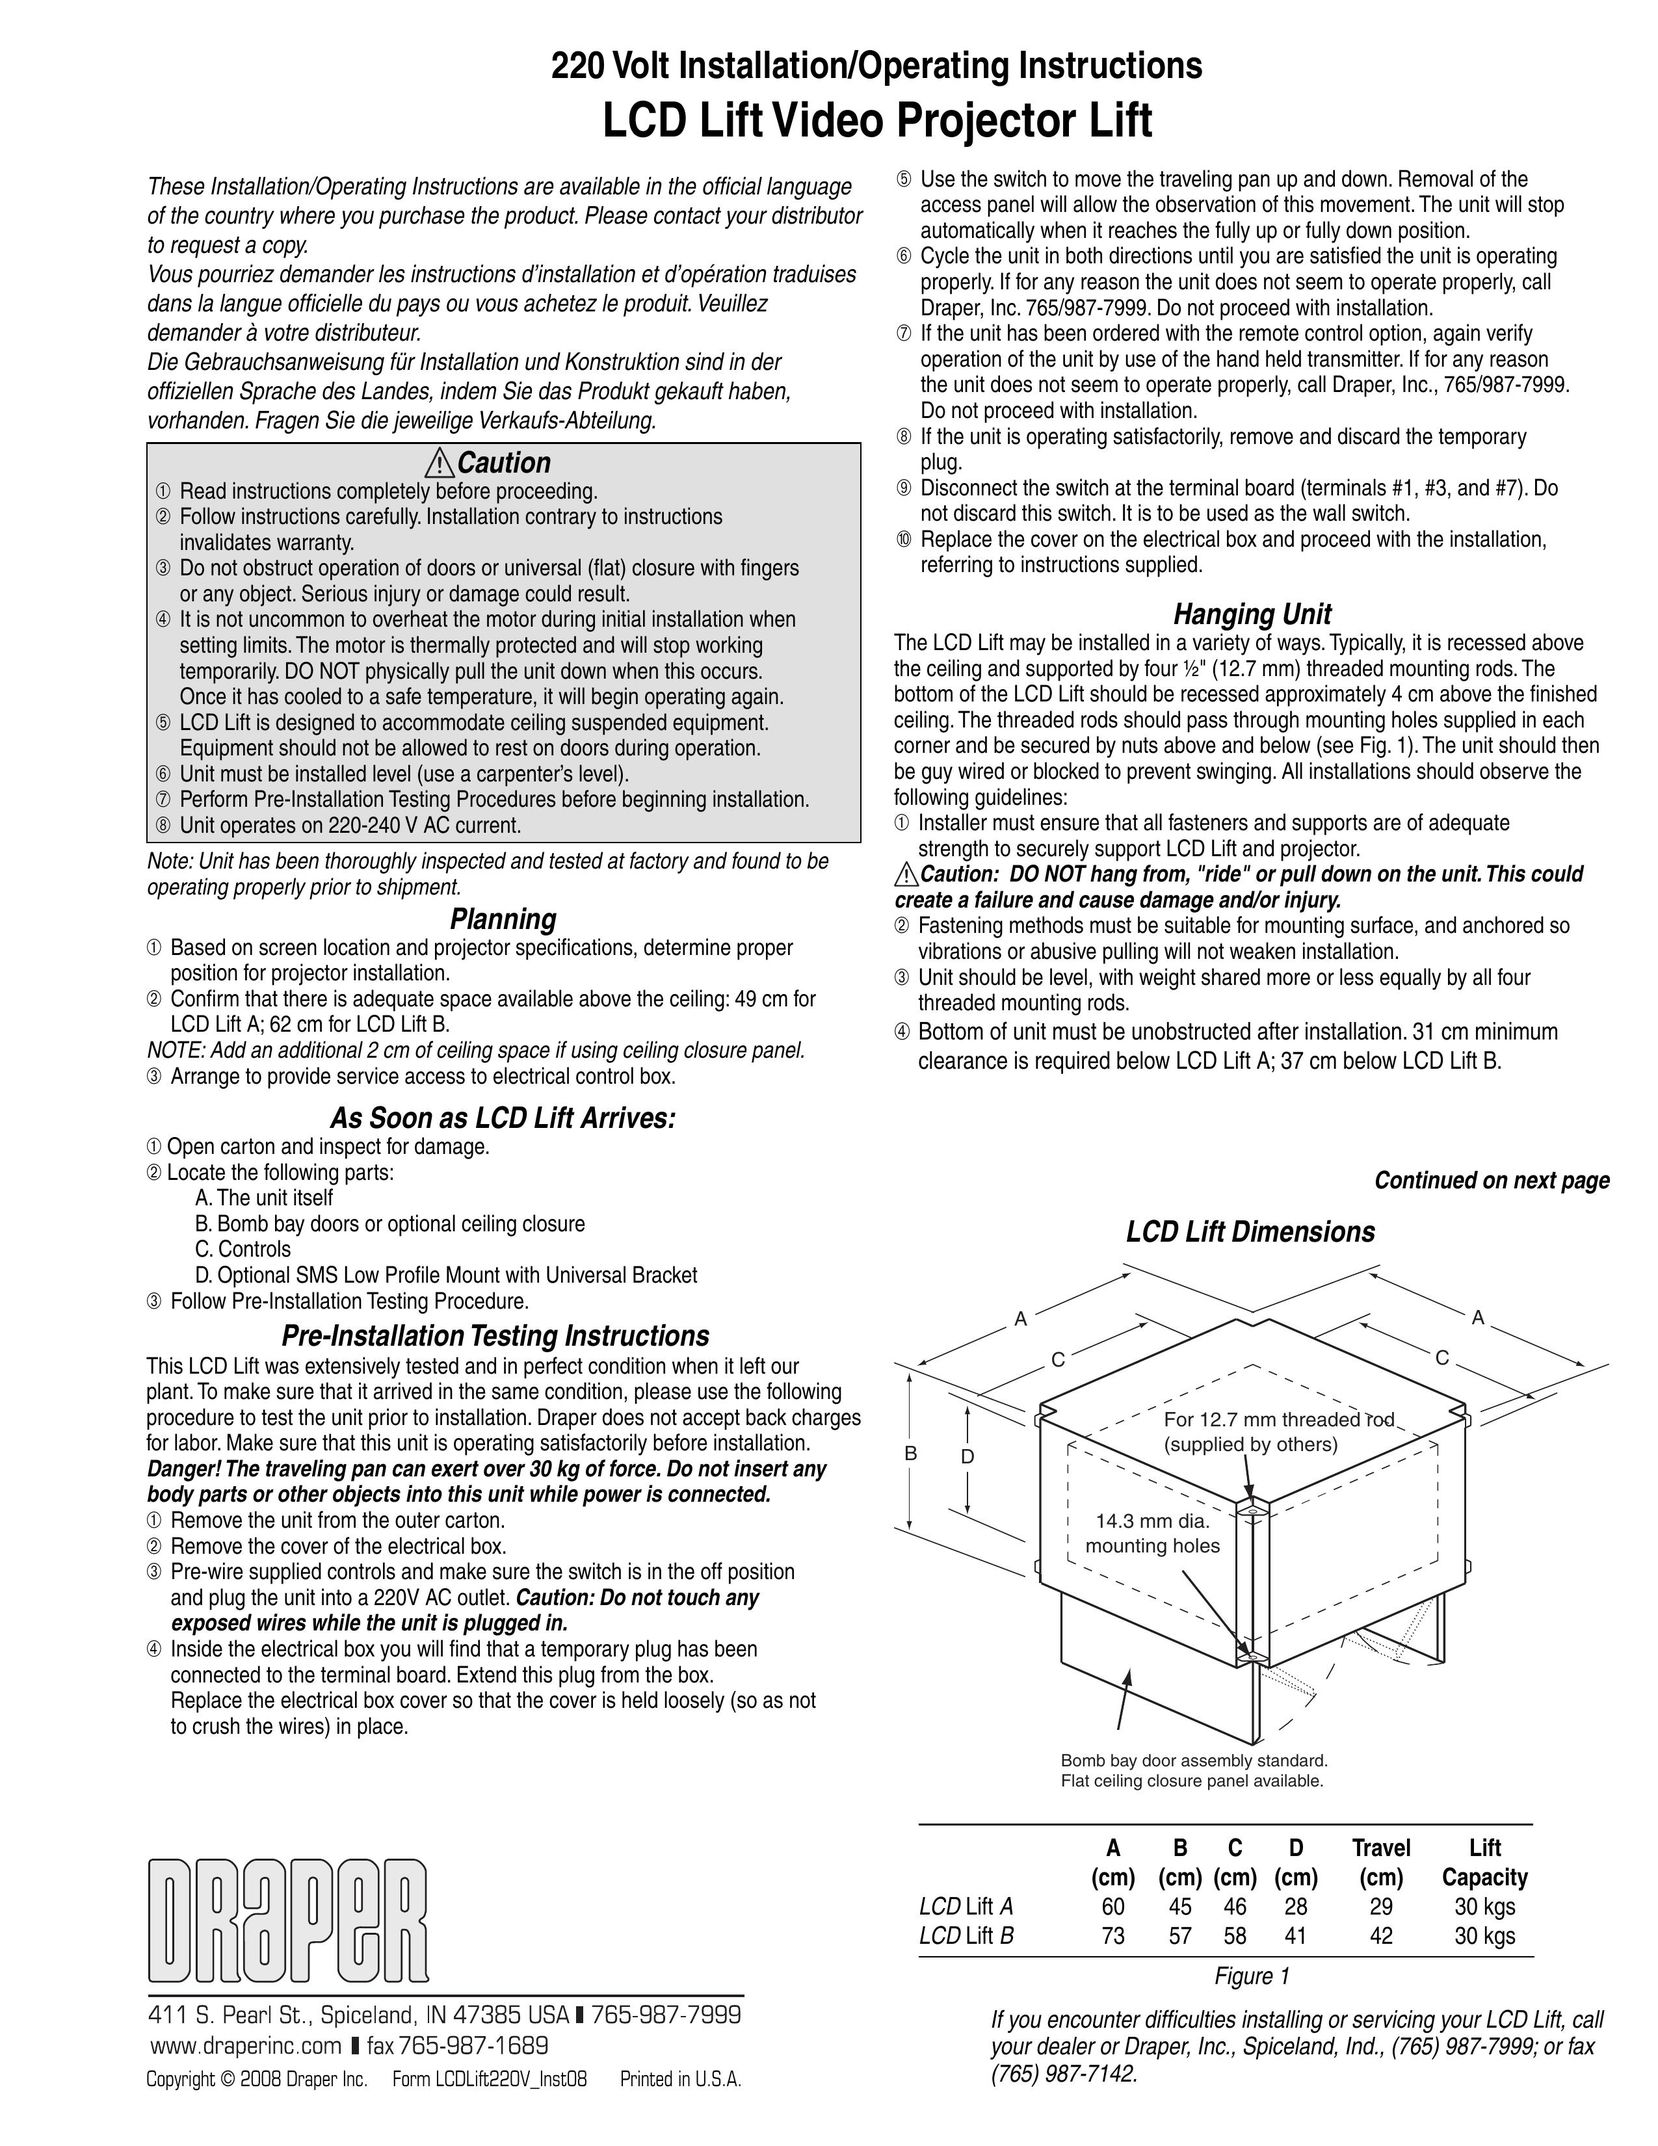 Draper LCD Lift Video Projector Indoor Furnishings User Manual